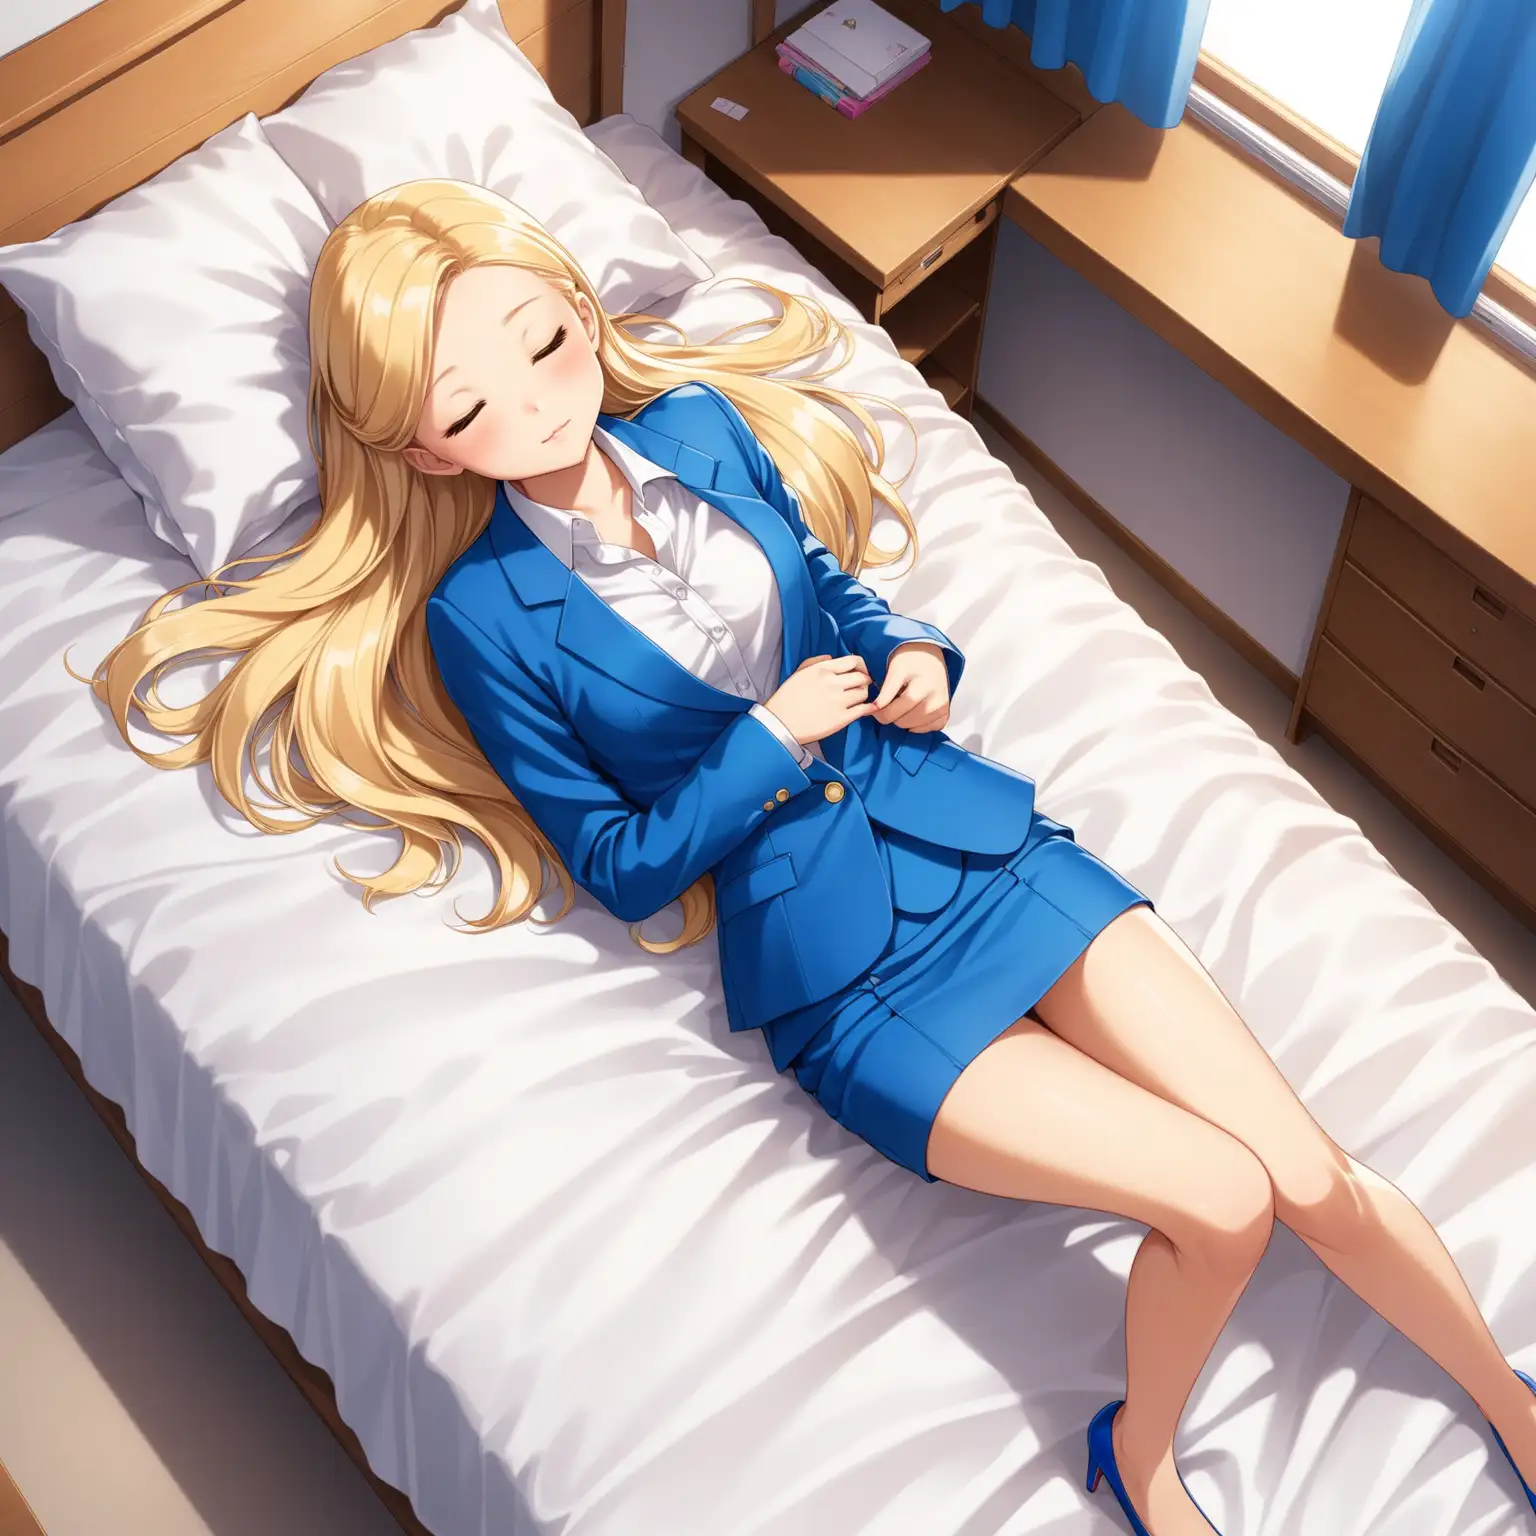 Serene Sleep Chelsea in Royal Blue Suit on Bed